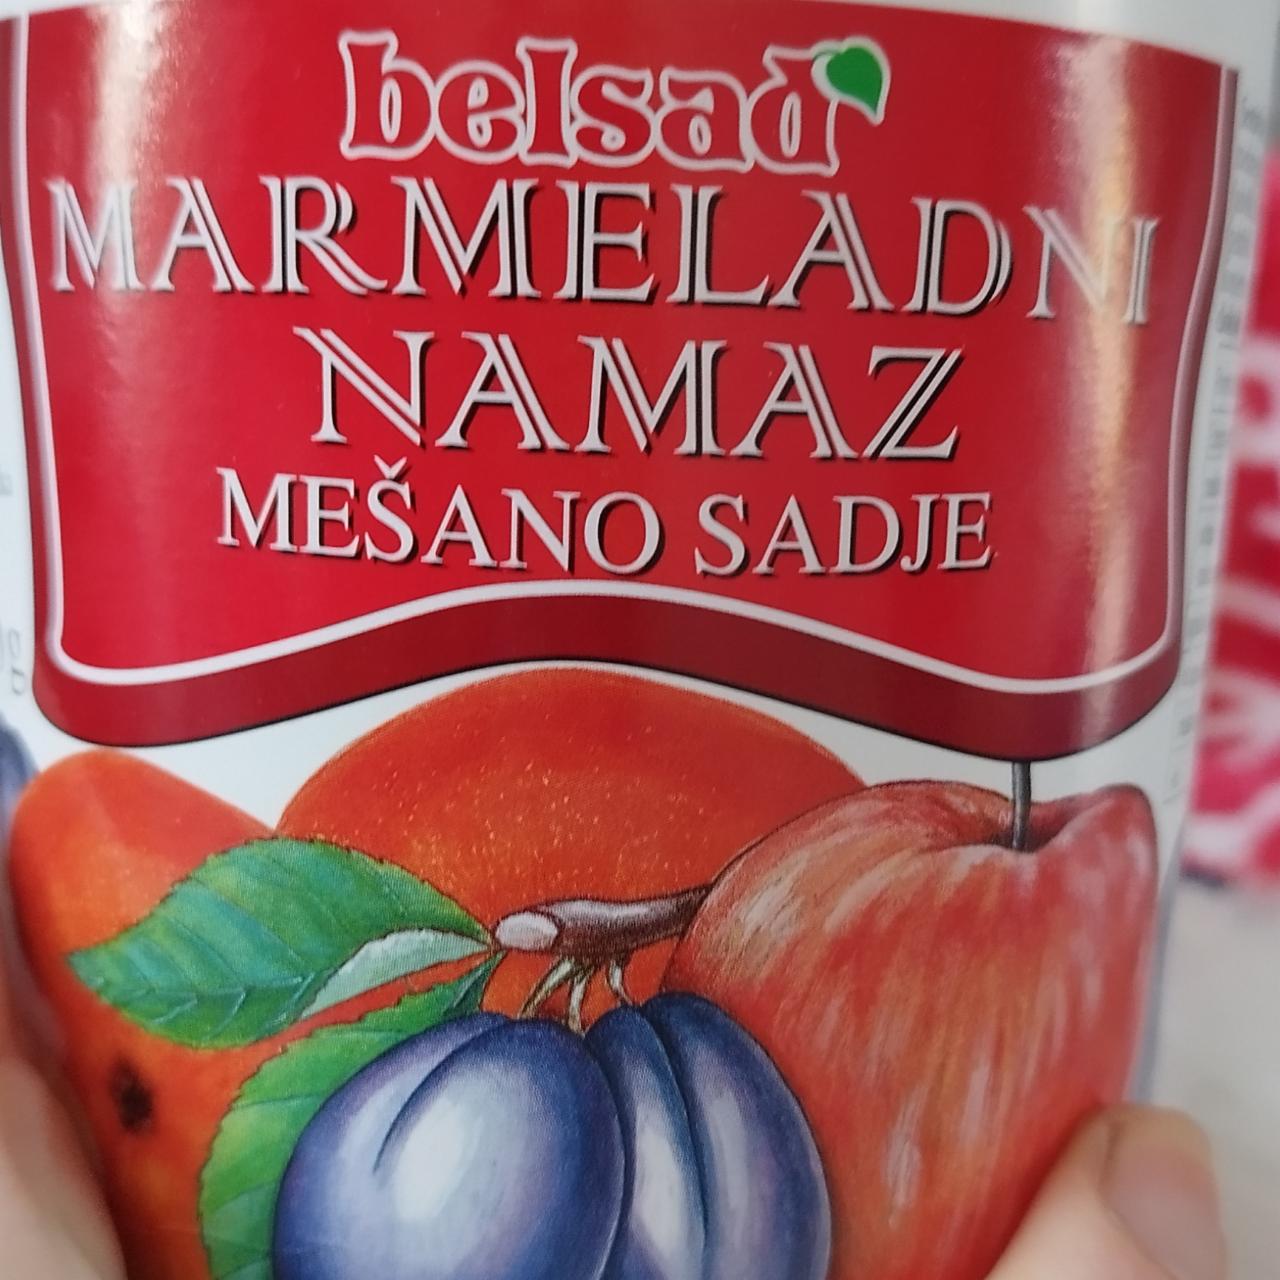 Фото - Marmeladni namaz mesano sadje Belsad